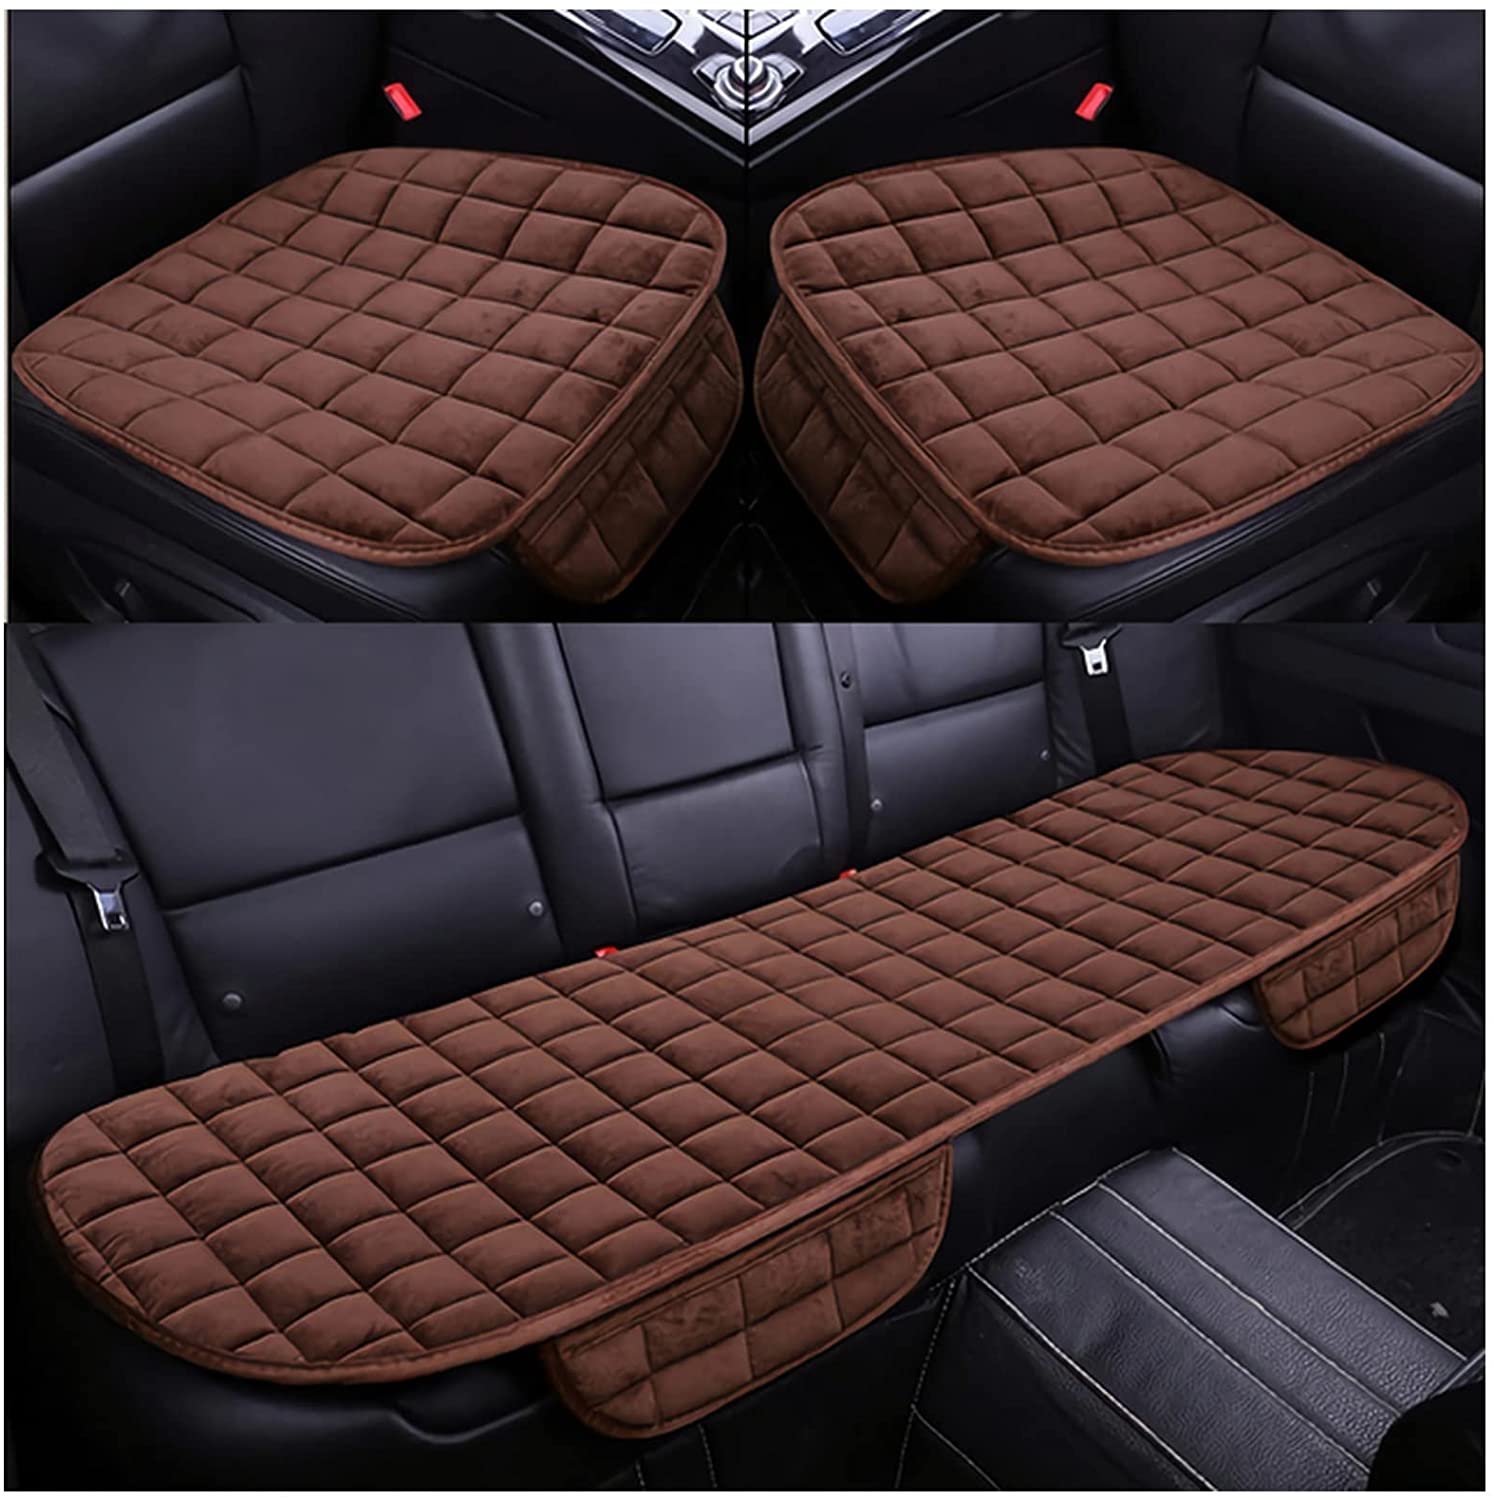 bamutech Seat Cushion Car Seat Cover Fit Truck SUV Van Front Rear Flake Cloth Cushion Non-Slip Winter Car Protector Mat Pad Keep Warm Universal Seat Cushion Chair (Size: Brown 3pcs)